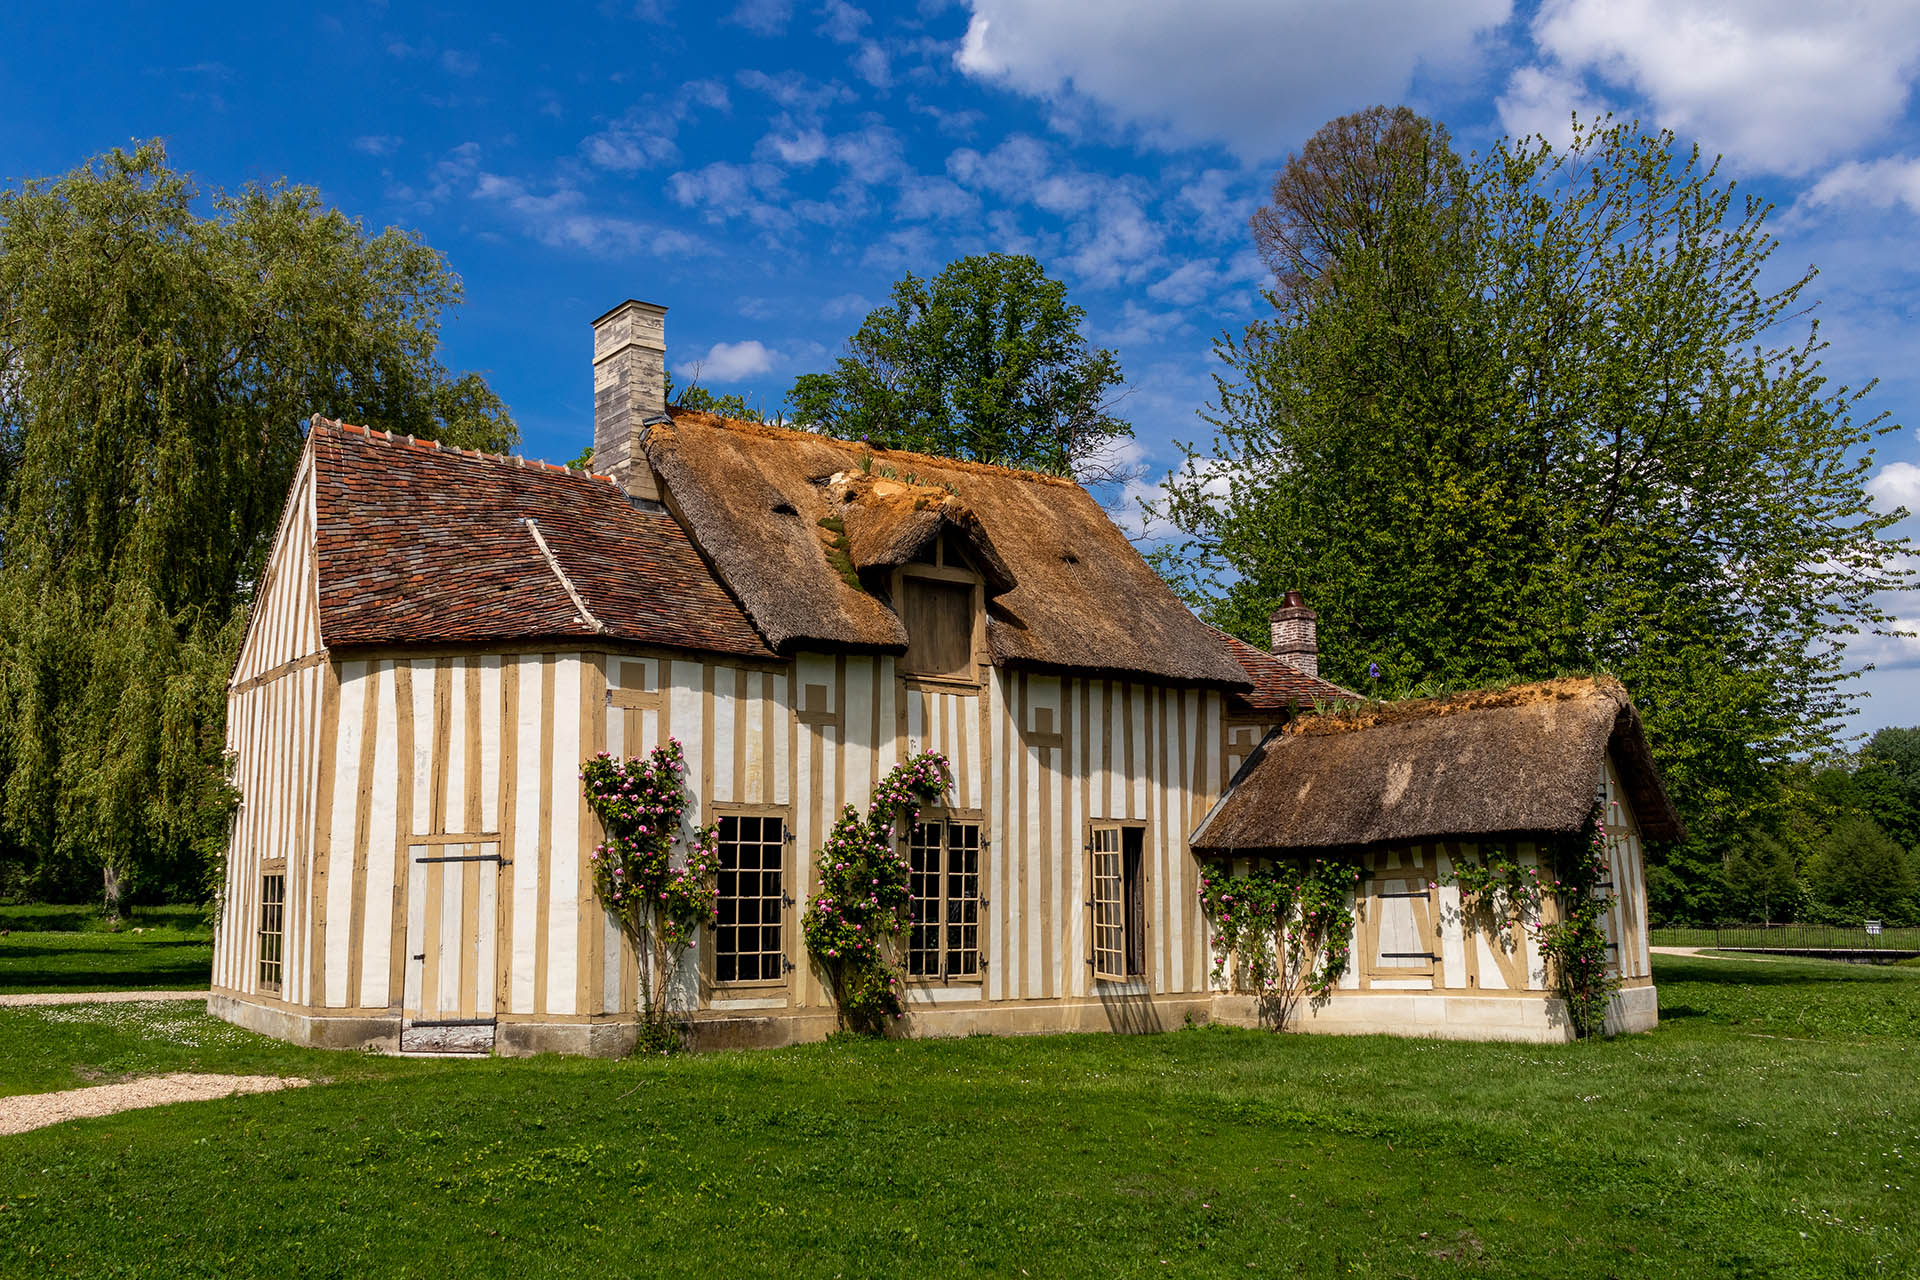 Hameau, het boerderijachtige dorpje in de tuinen van Château de Chantilly.